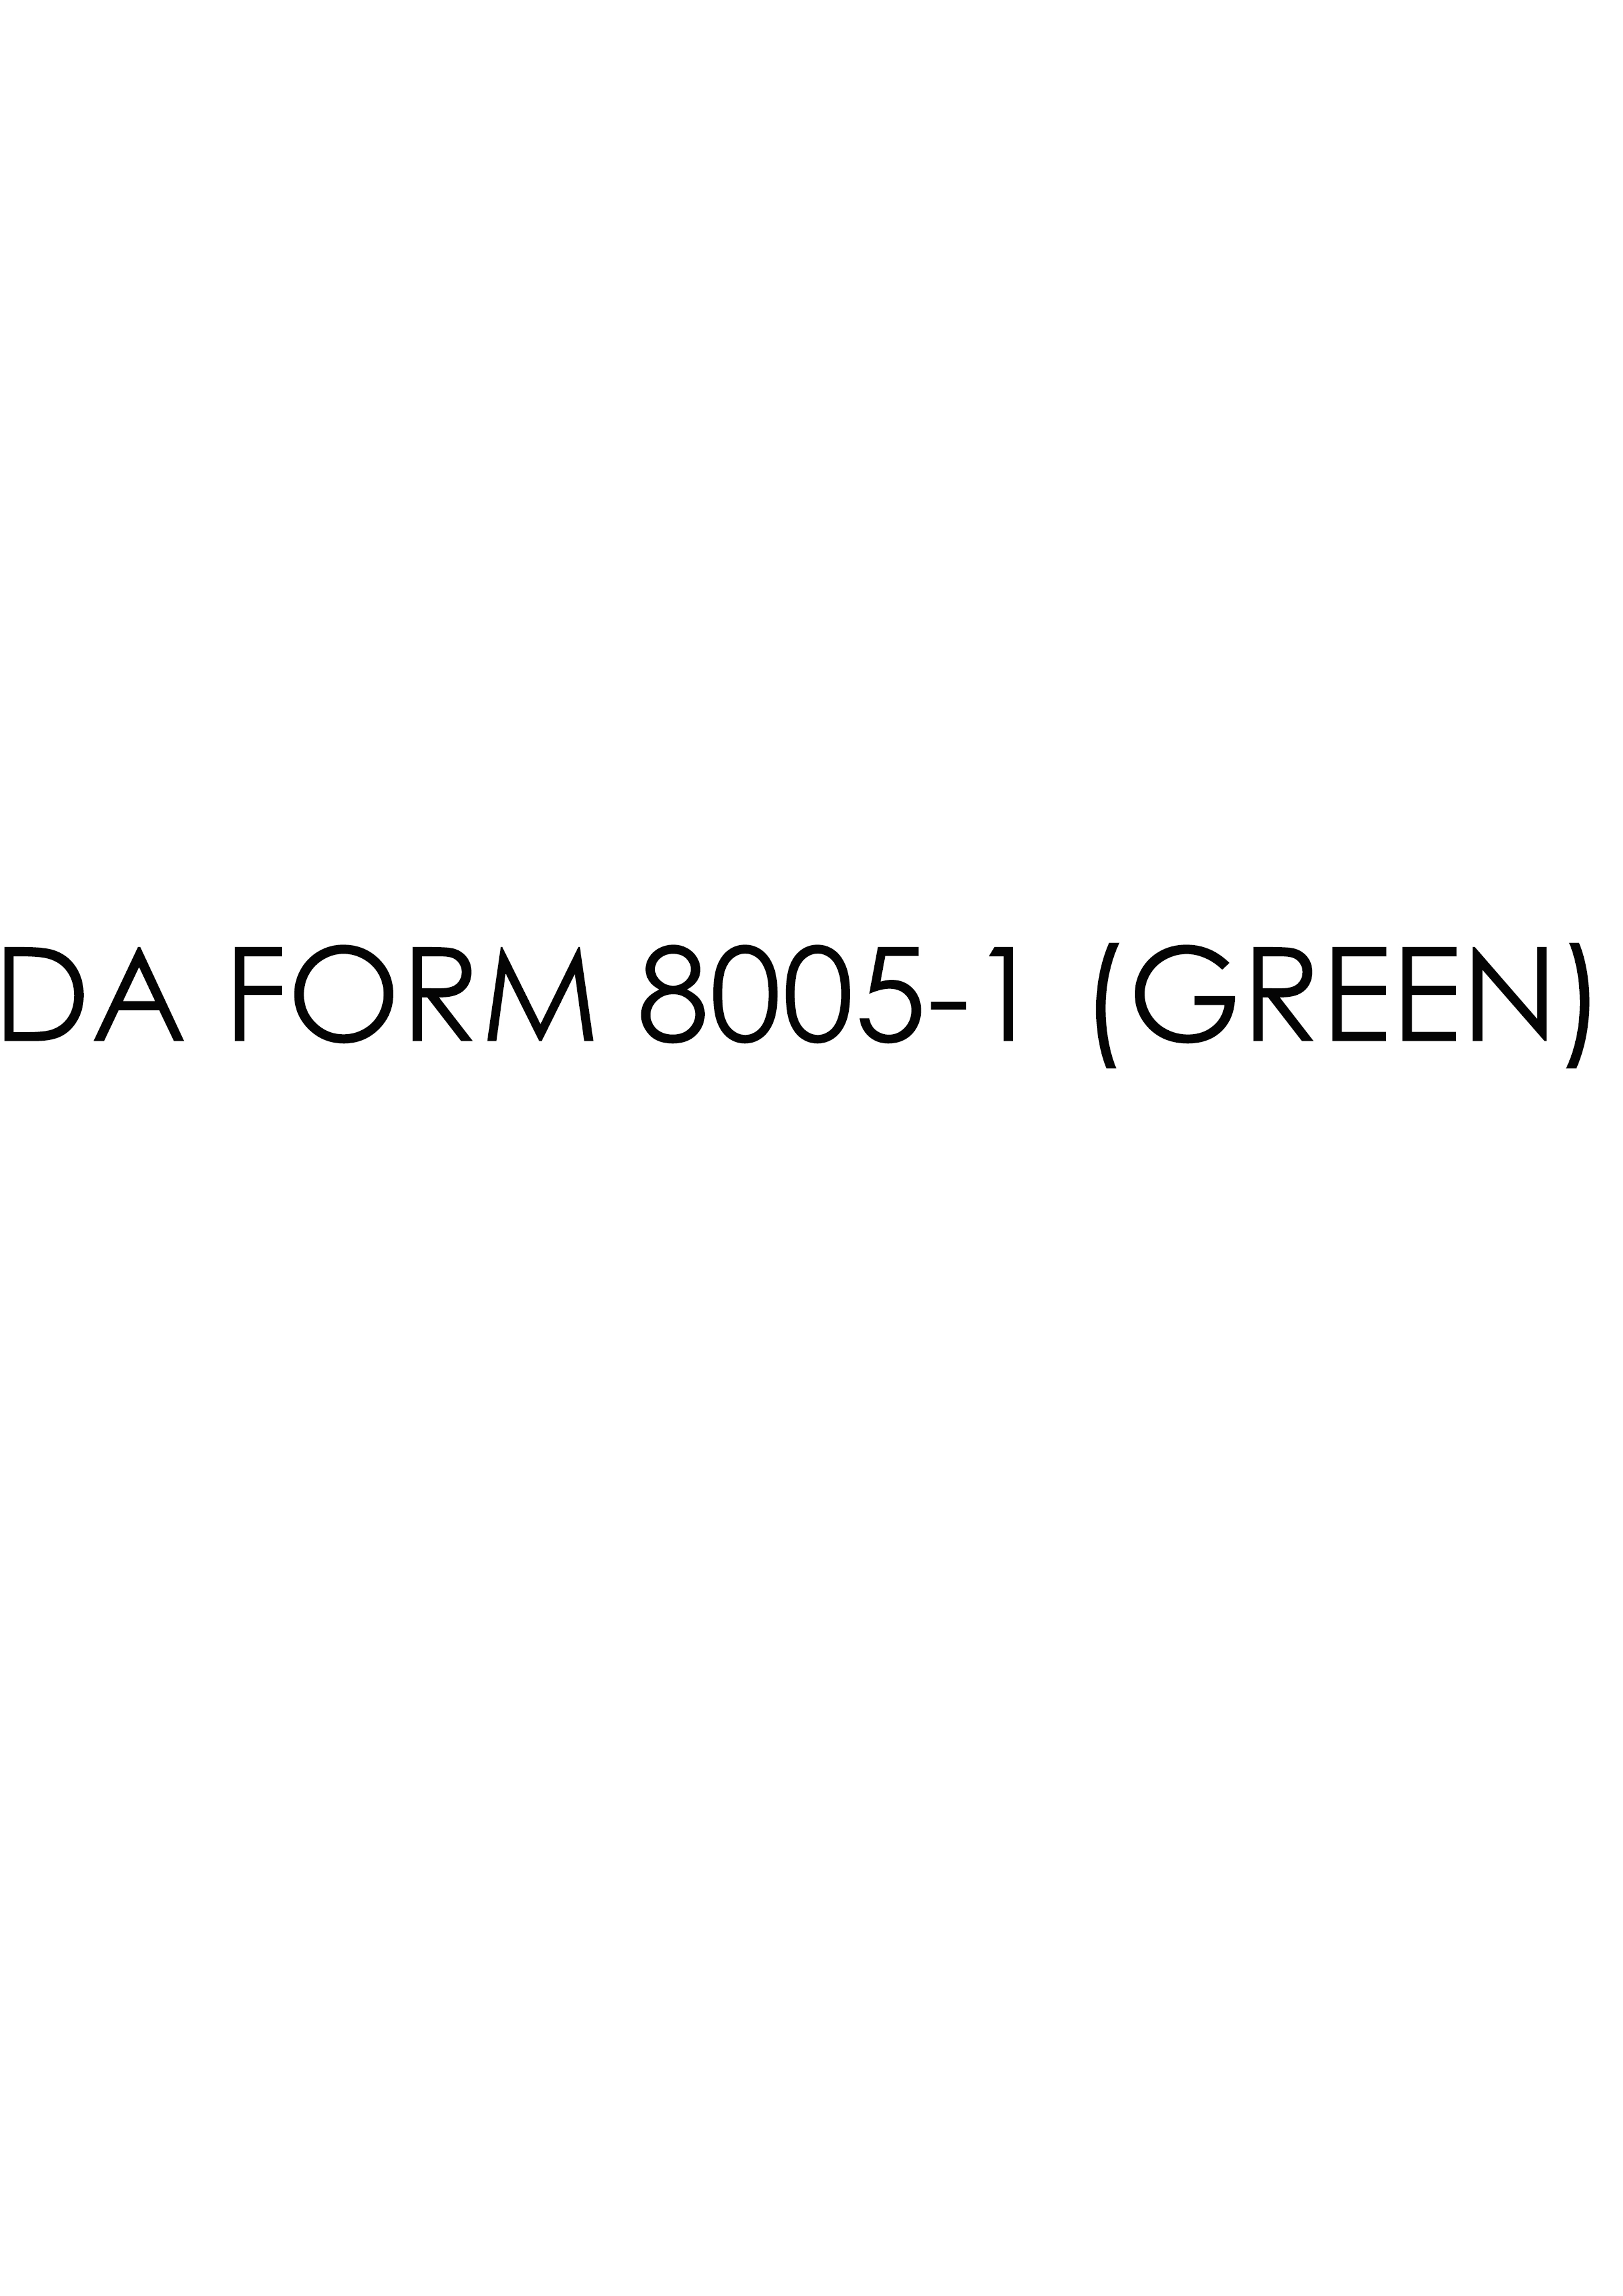 Download da 8005-1 (GREEN) Form